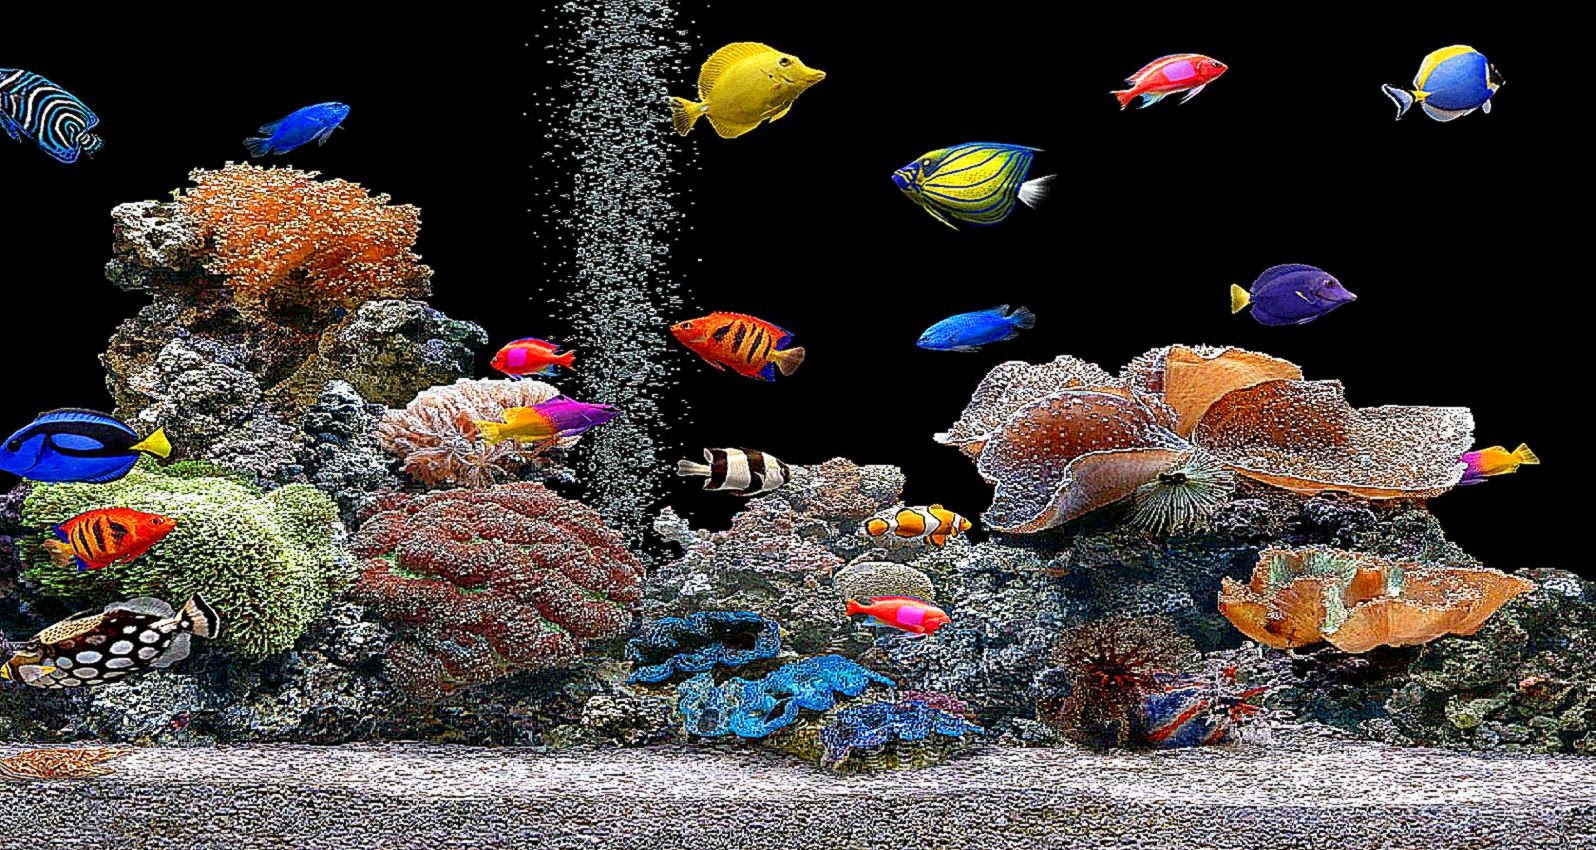 moving fish wallpaper free download,coral reef,reef,stony coral,marine biology,aquarium decor